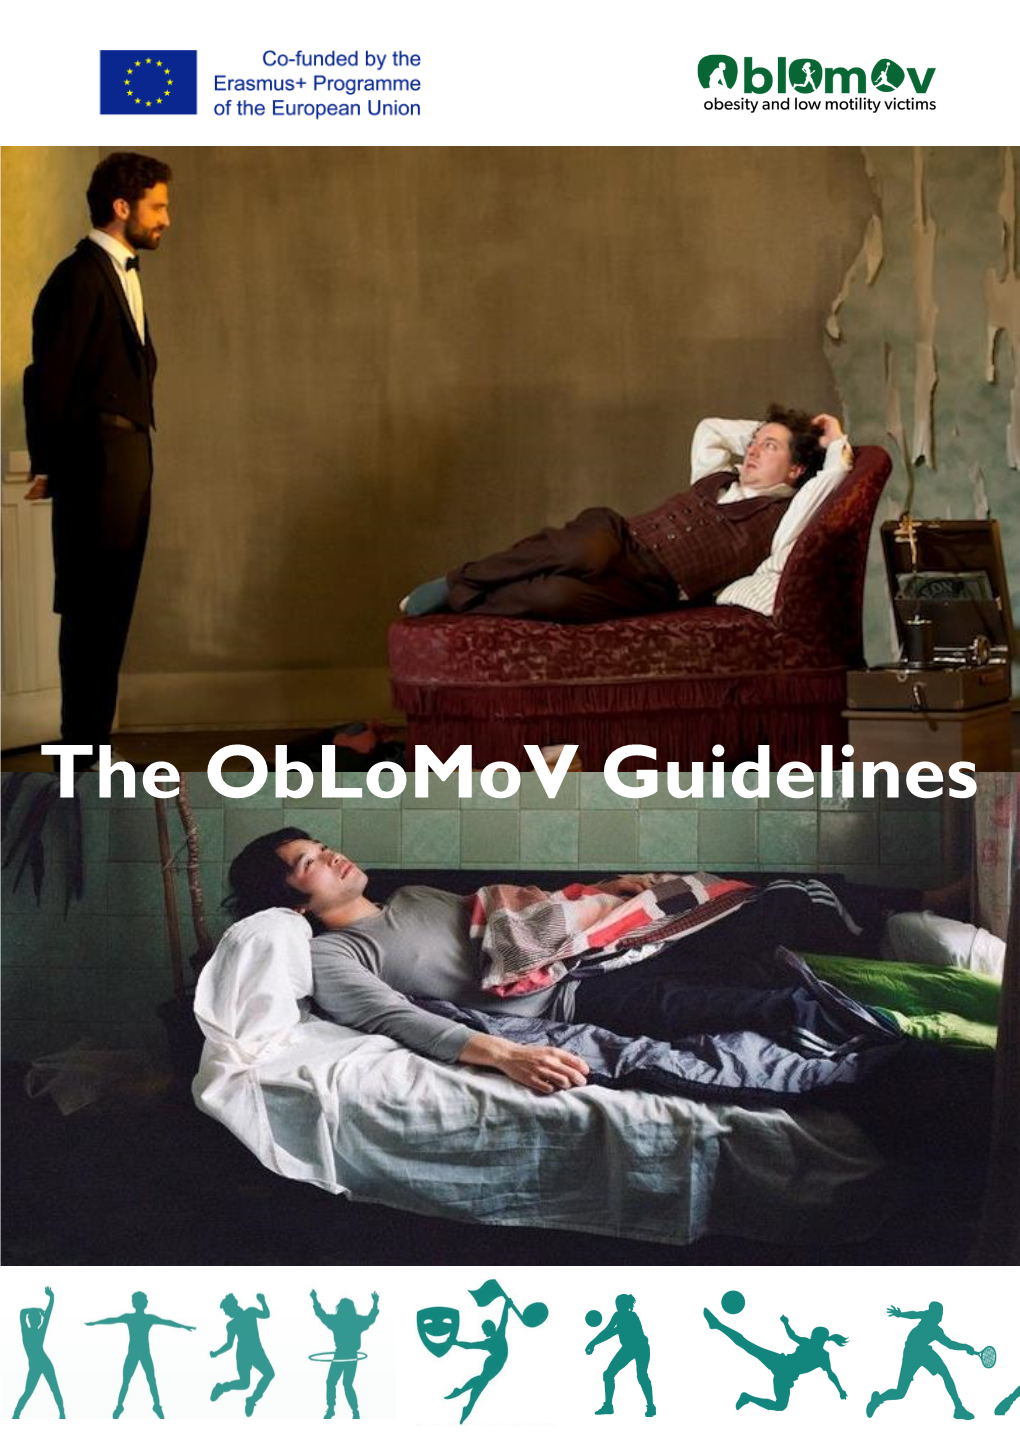 The Oblomov Guidelines